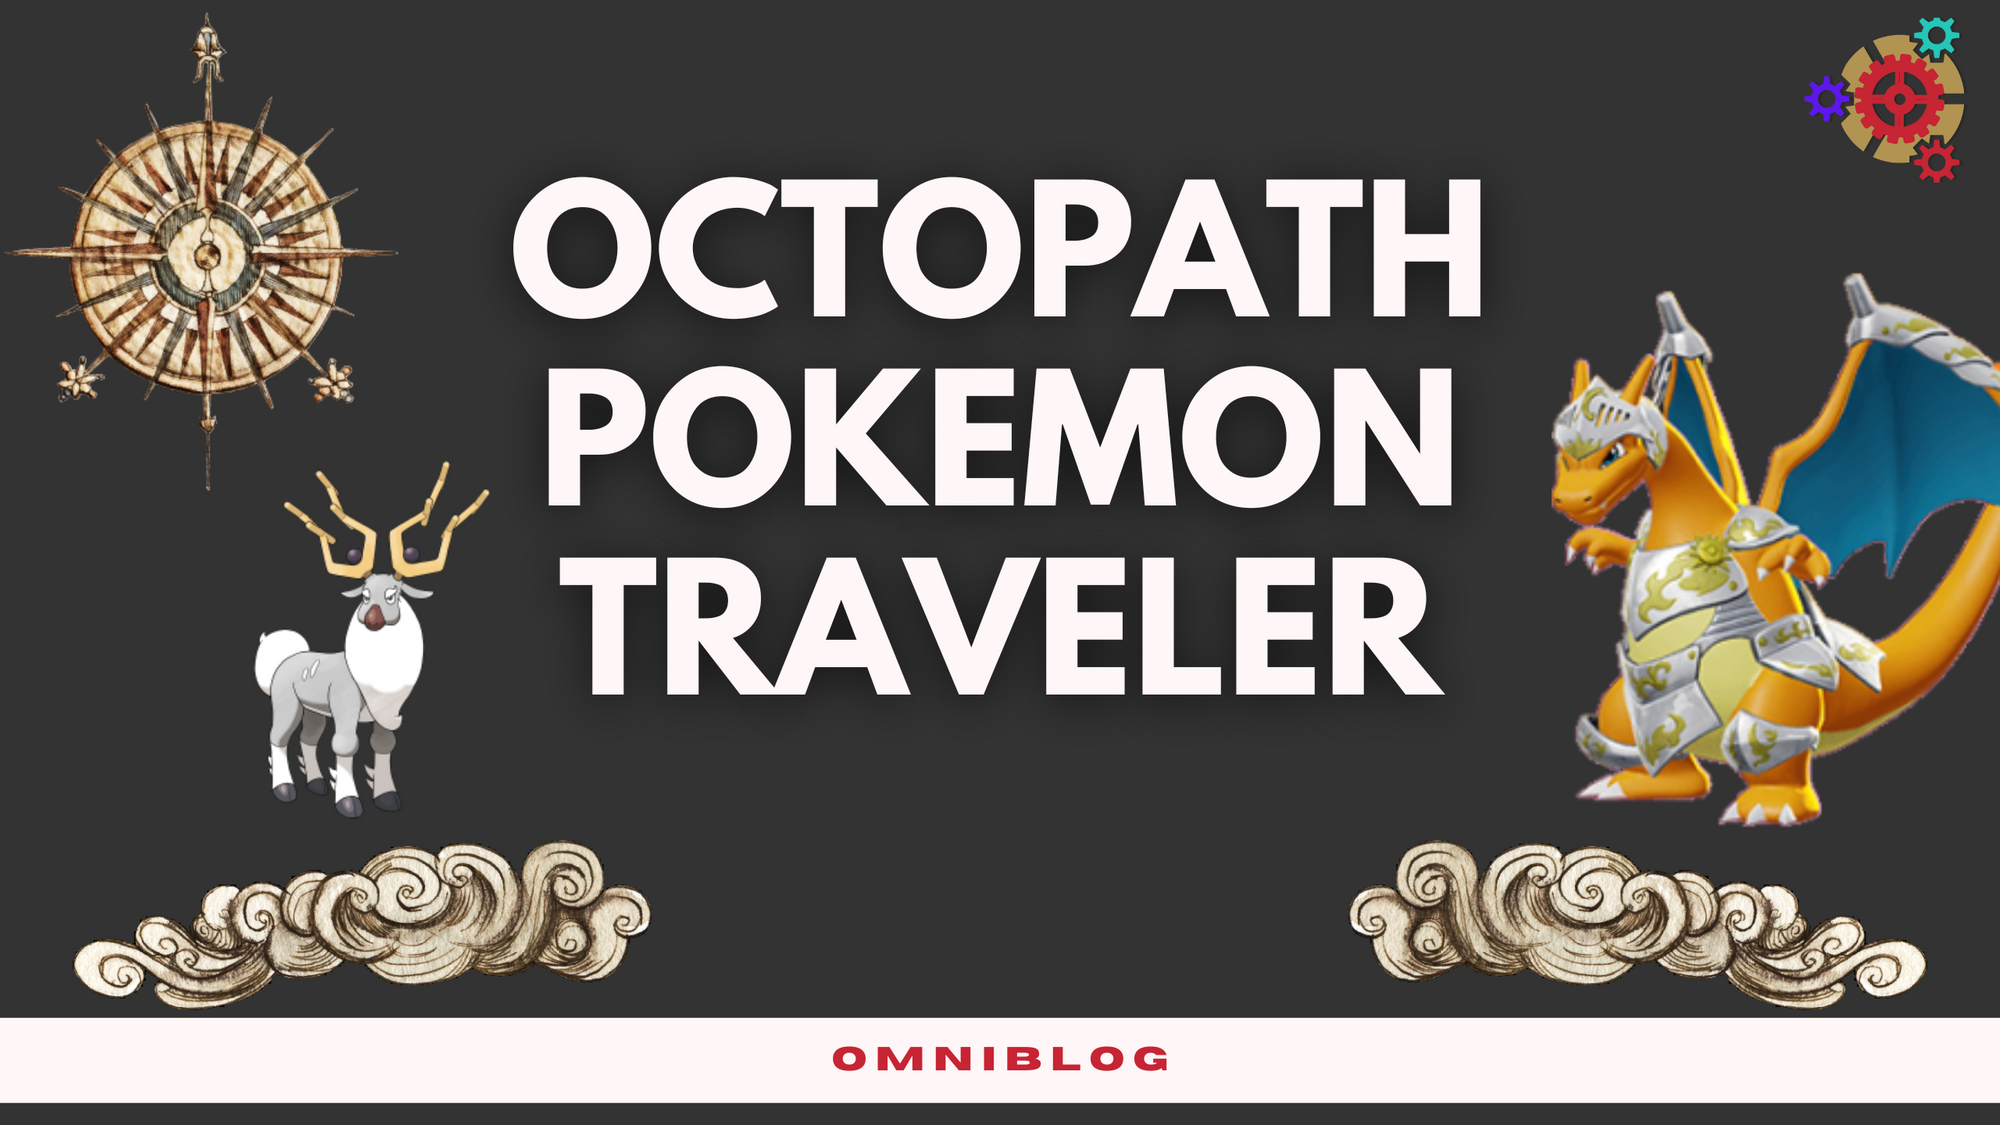 Octopath Pokemon Traveler